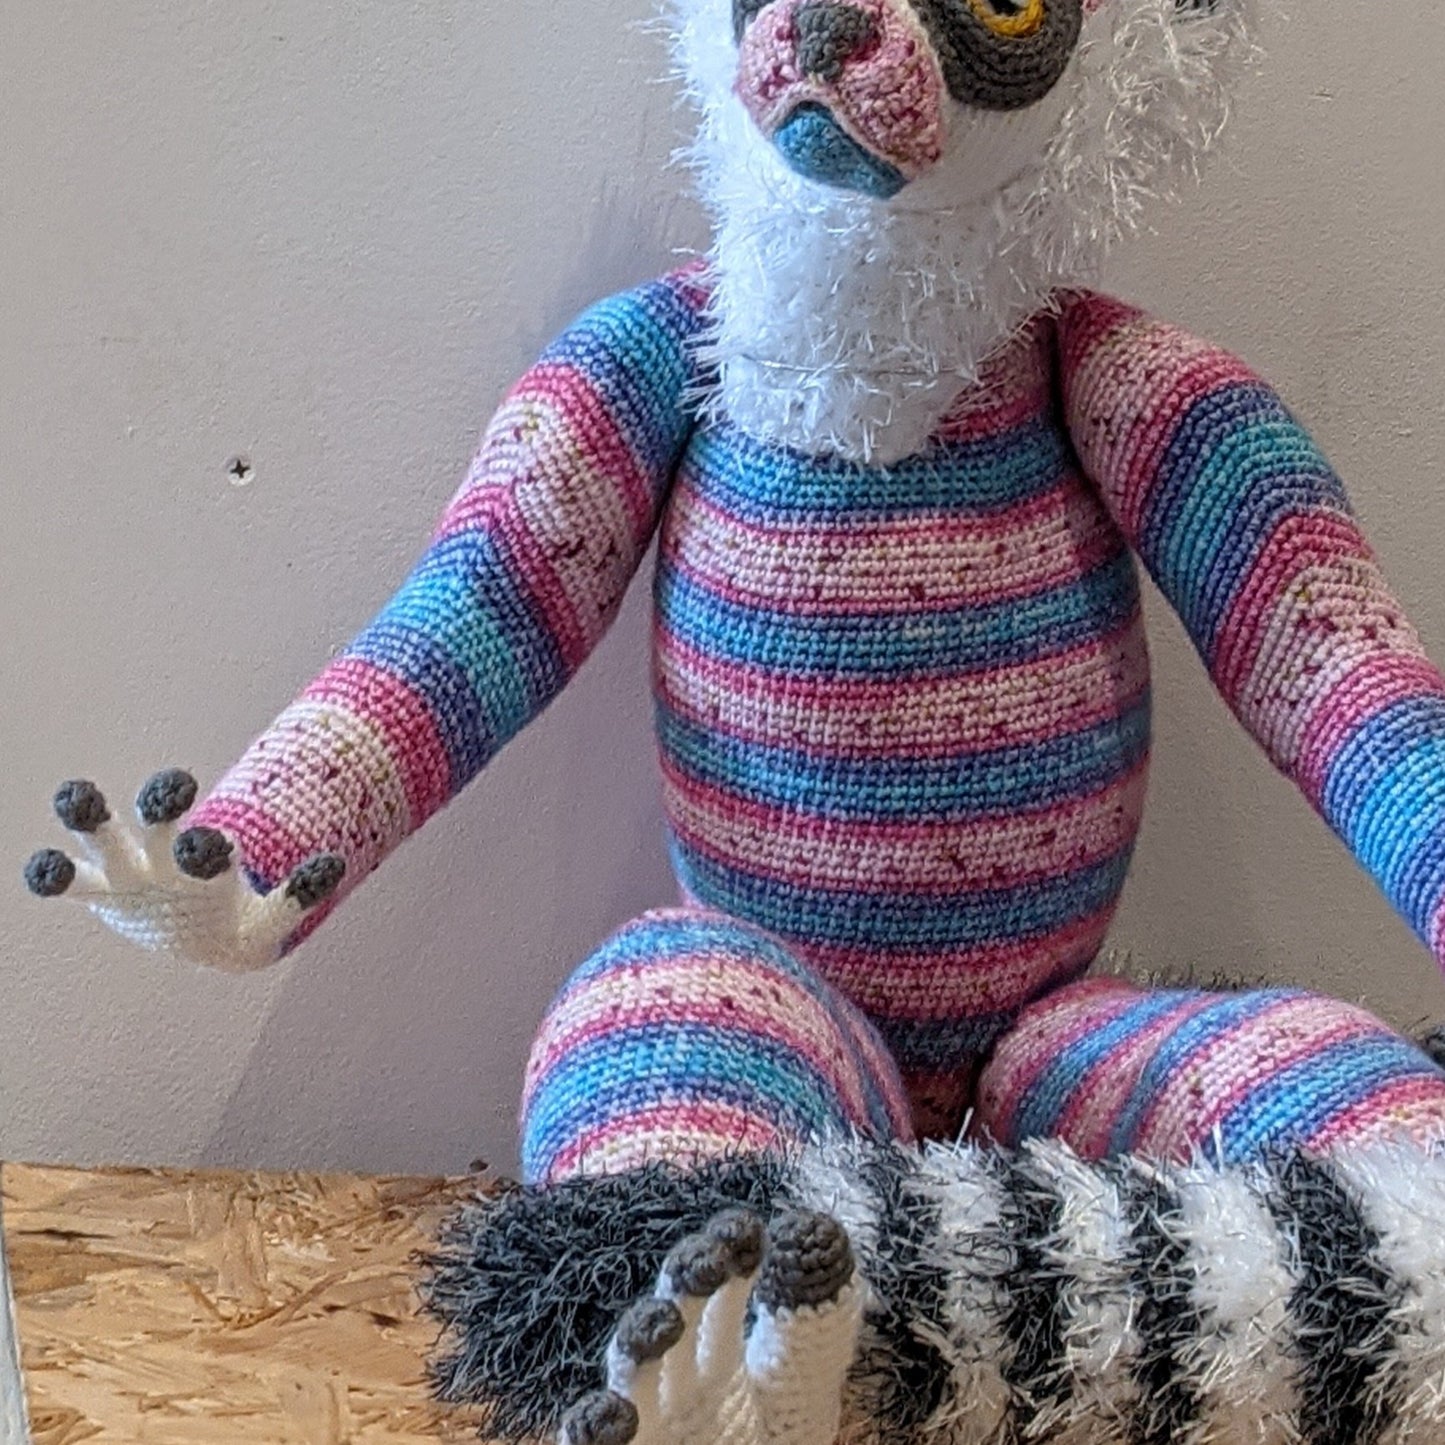 Lifesize crochet lemur